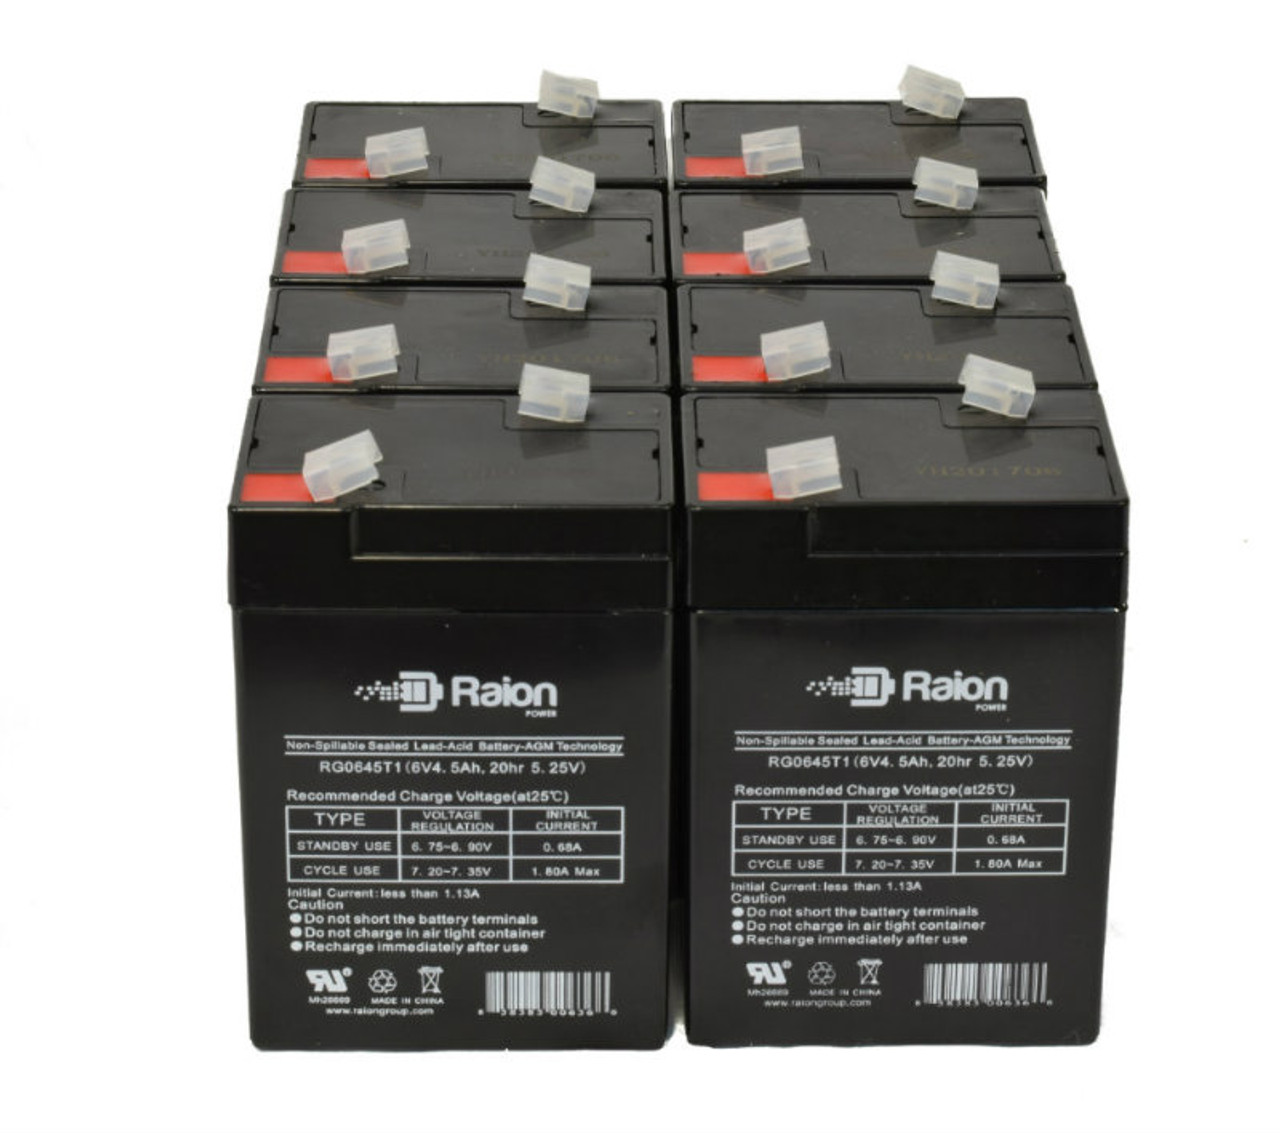 Raion Power 6V 4.5Ah Replacement Emergency Light Battery for Light Alarms 2FL1 - 8 Pack